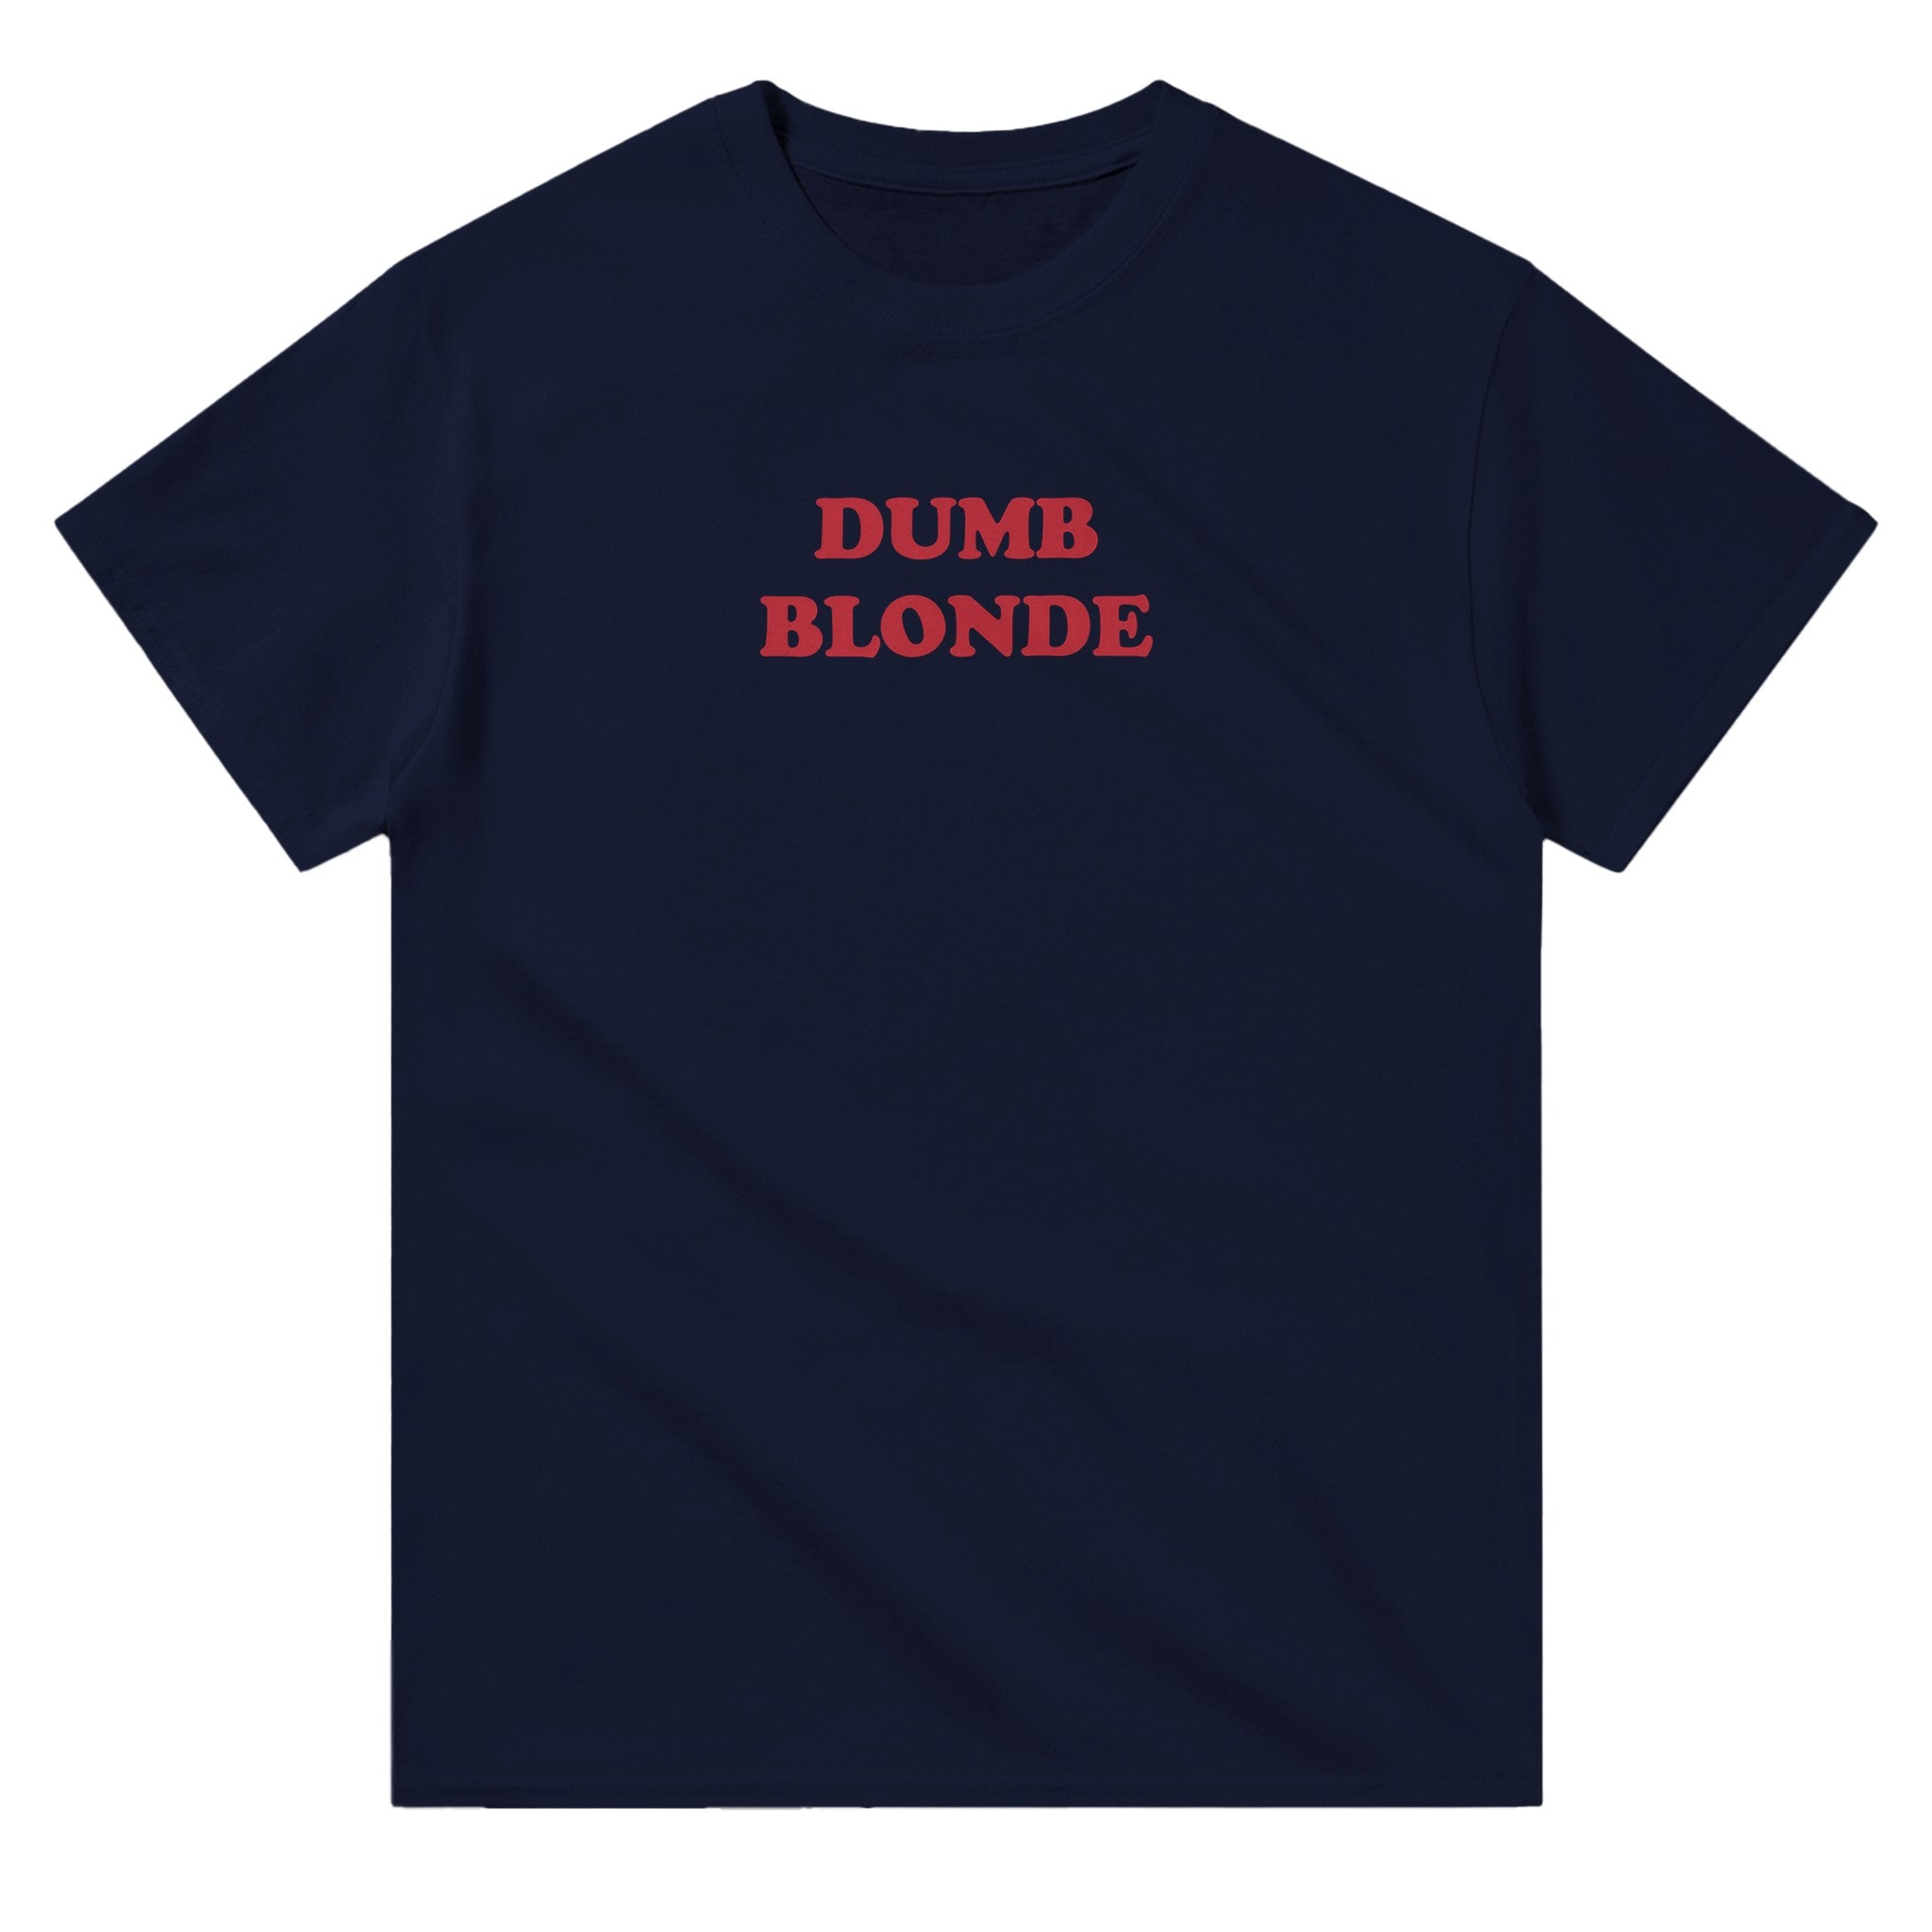 'Dumb Blonde' classic tee